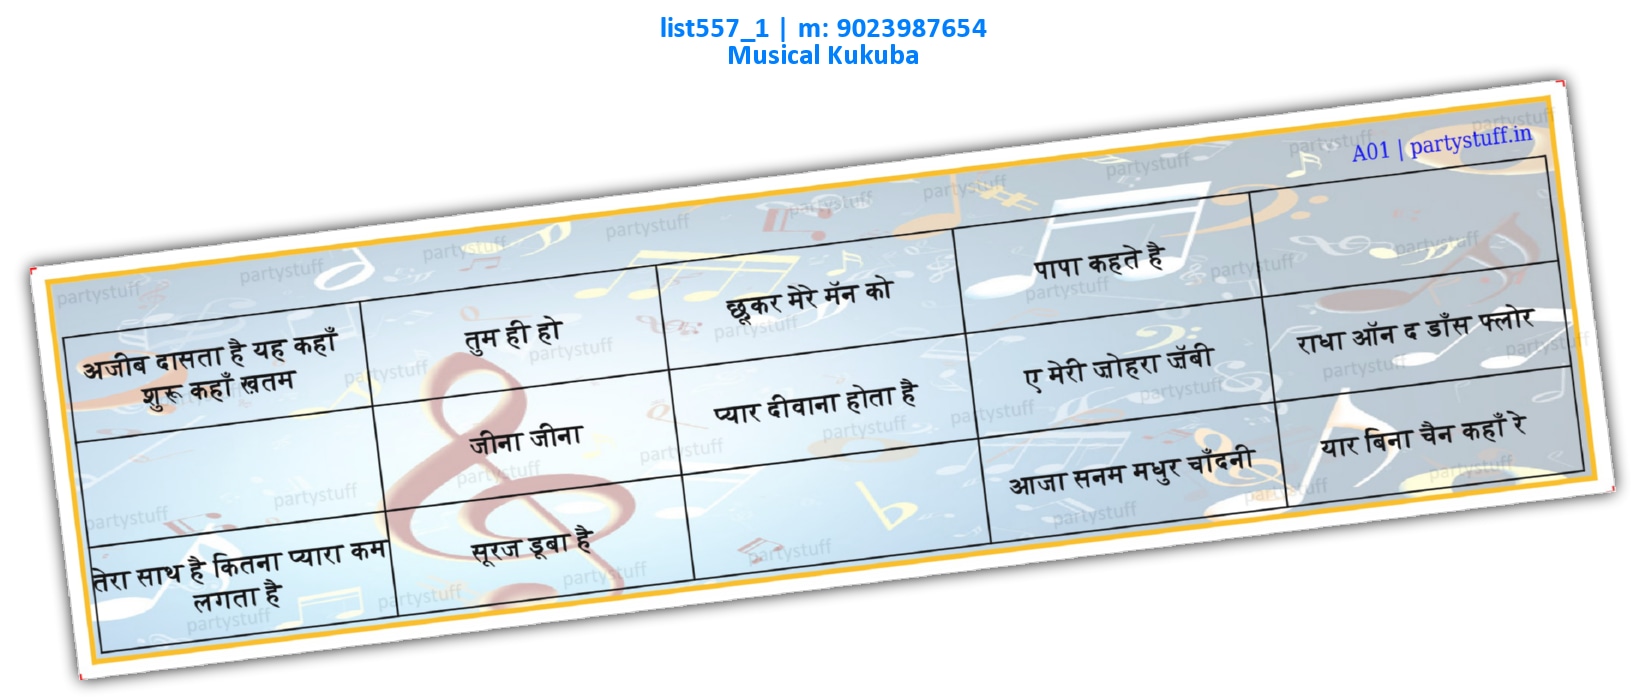 Songs Hindi 7 | Printed list557_1 Printed Tambola Housie